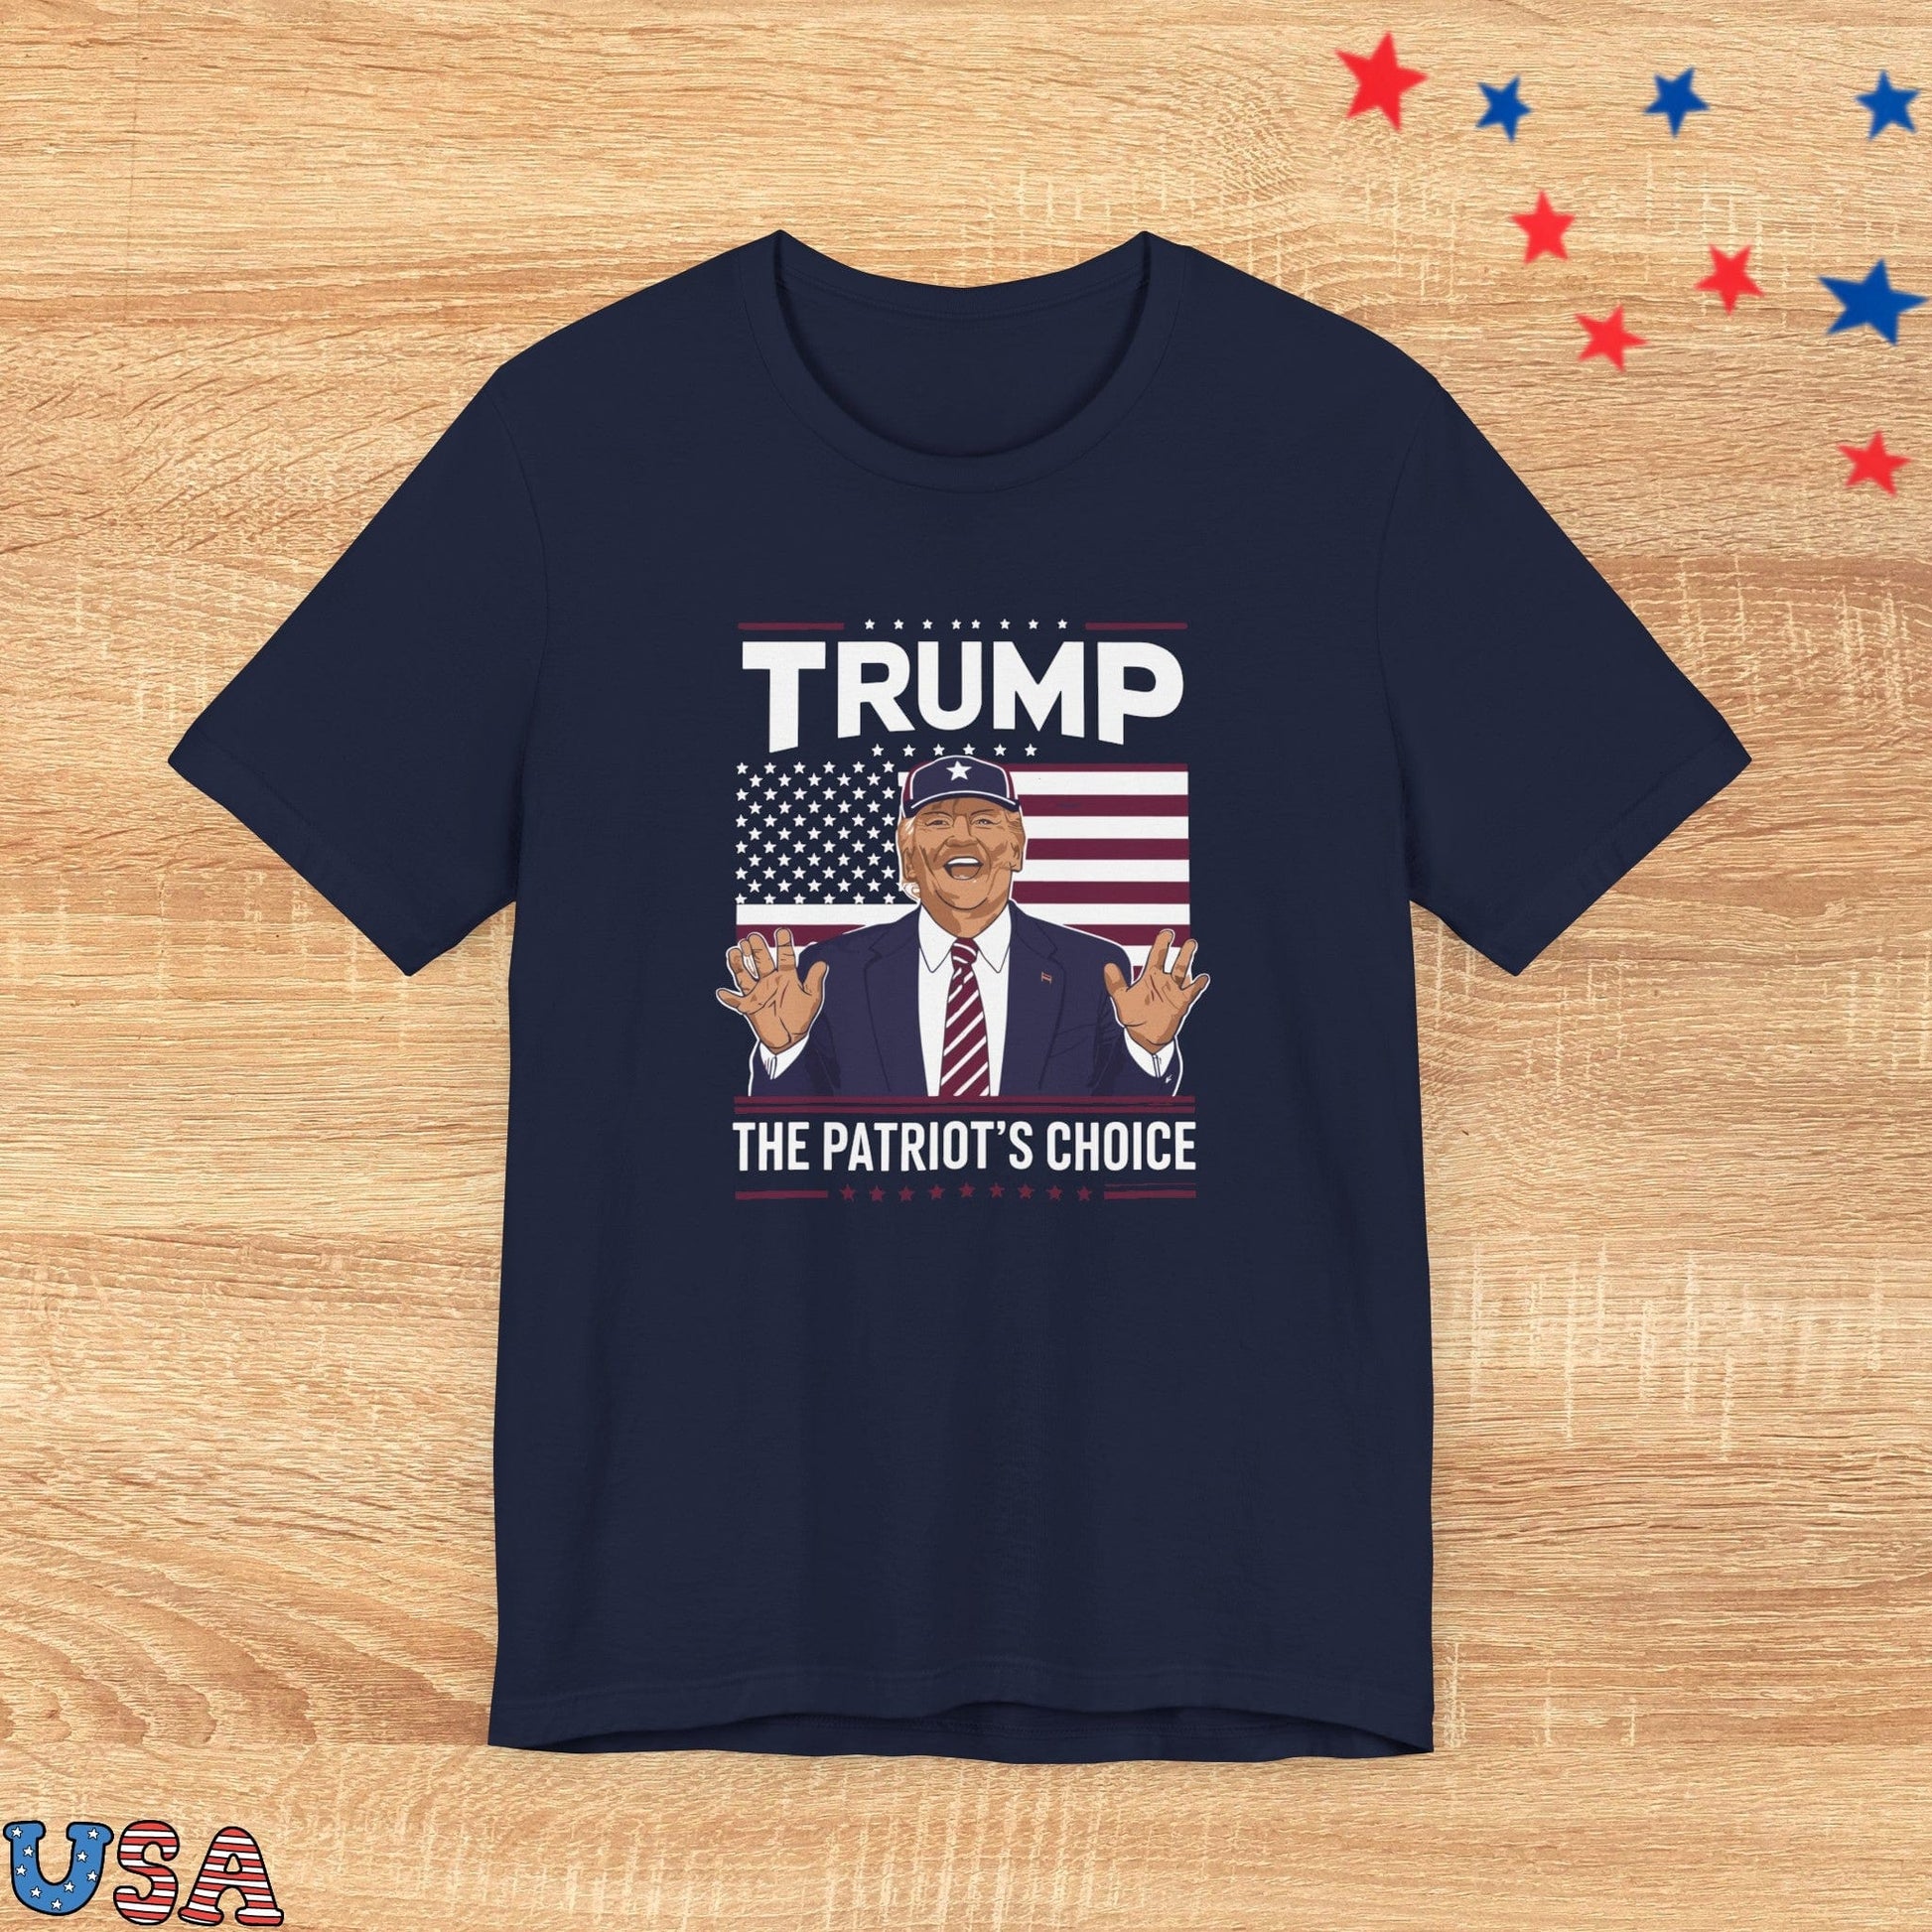 patriotic stars T-Shirt Navy / XS Trump The Patriot's Choice